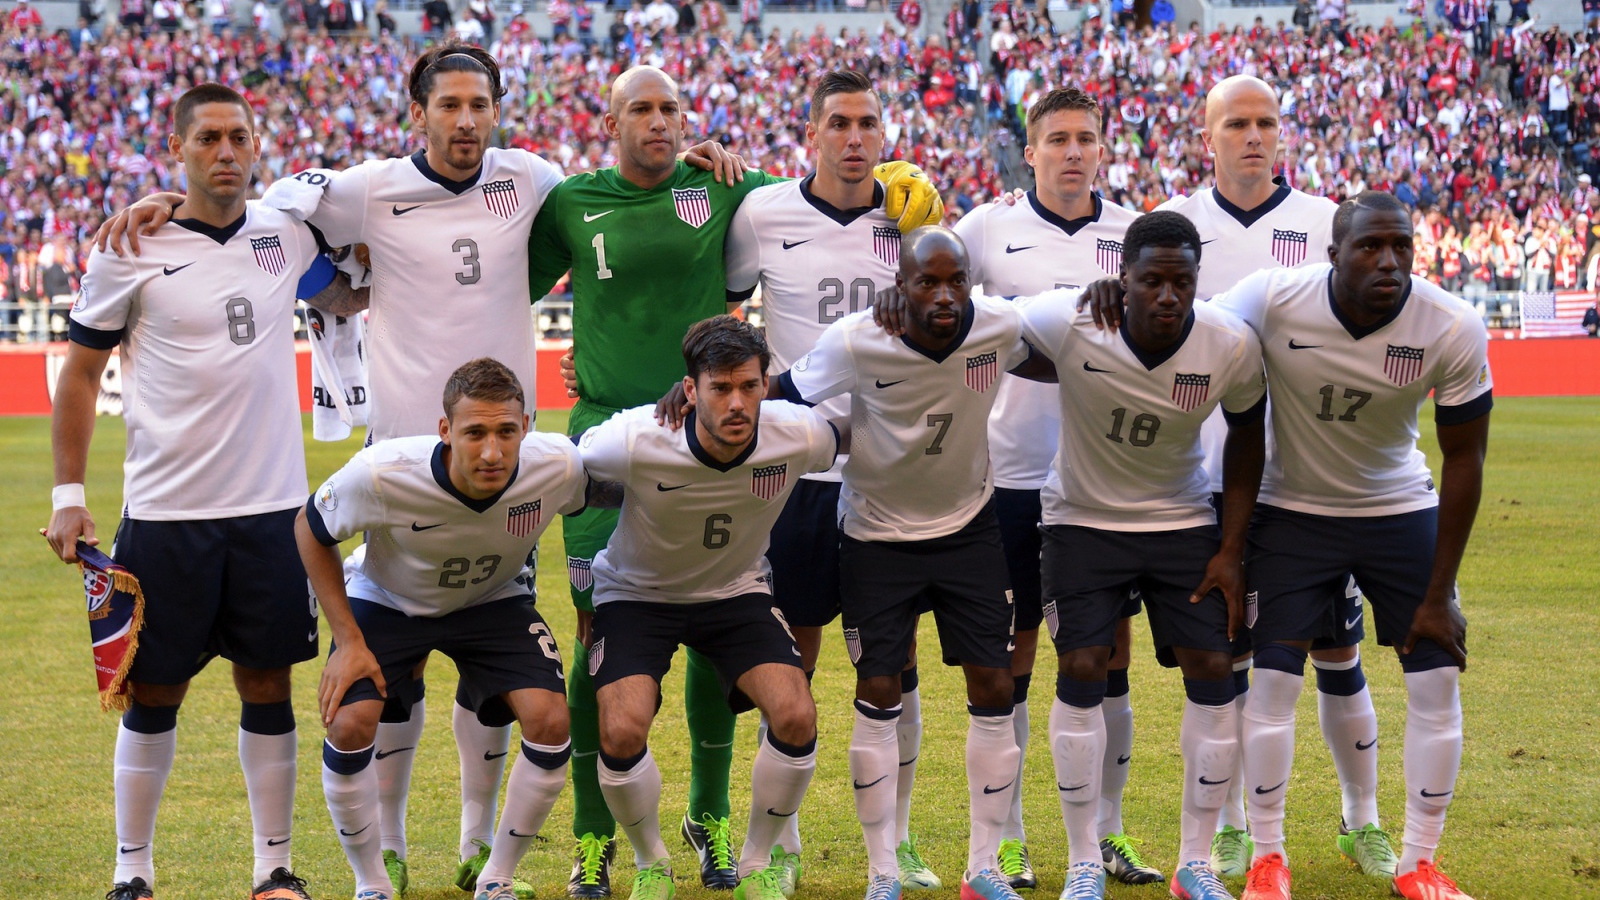 Сборная США на Чемпионате мира по футболу в Бразилии 2014